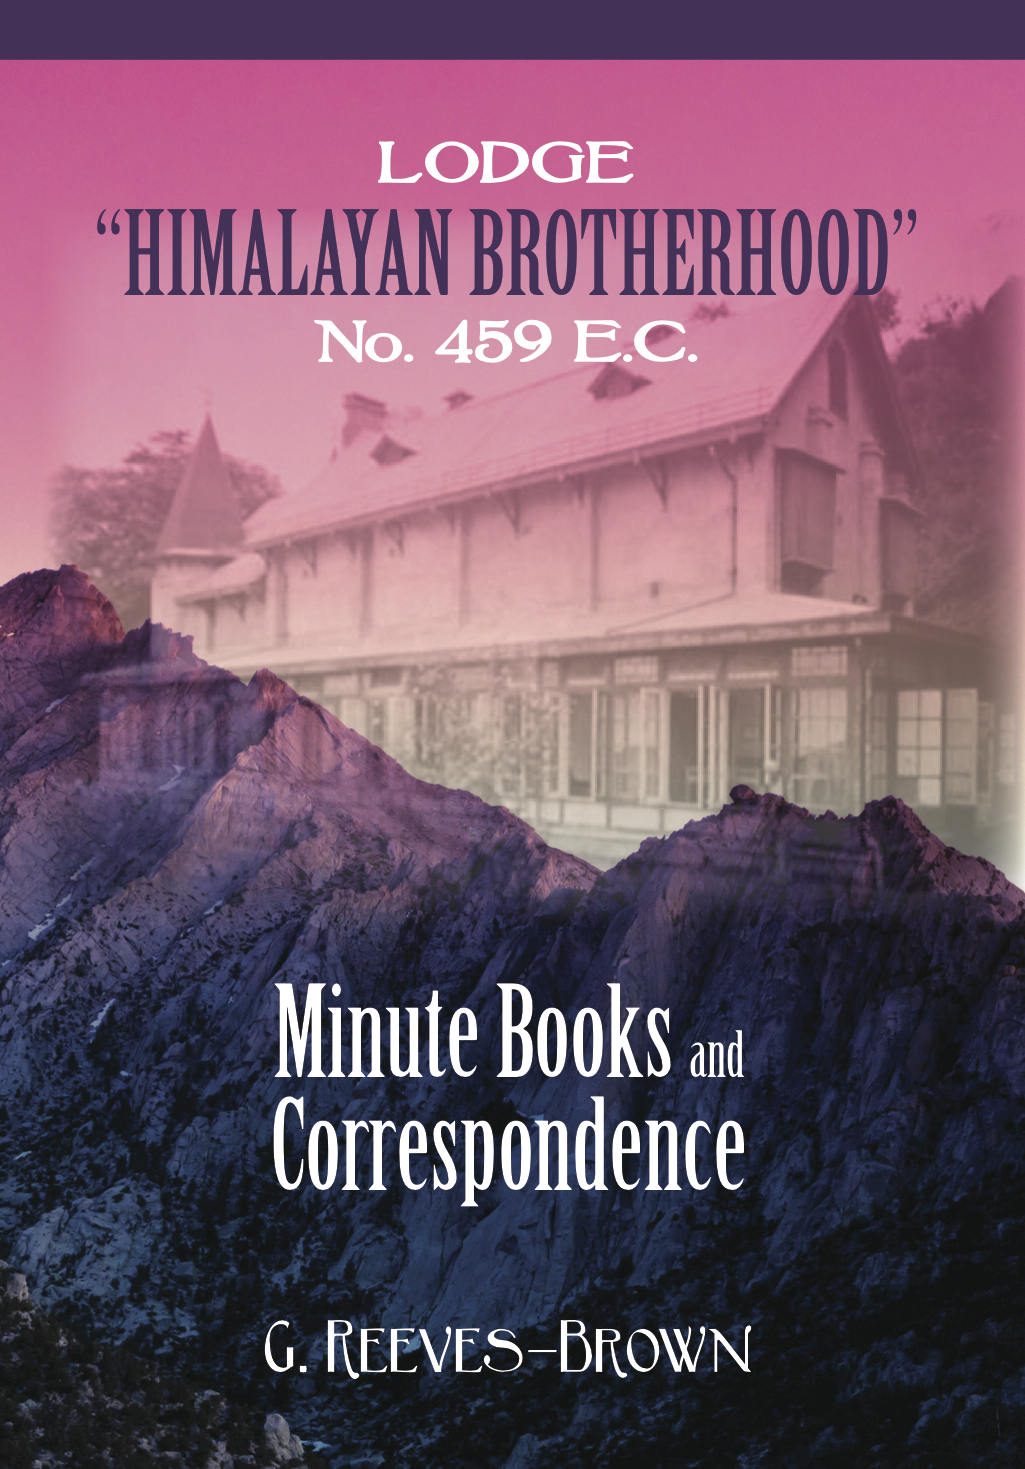 Lodge “Himalayan Brotherhood” No. 459 E.C.: Minute Books and Correspondence